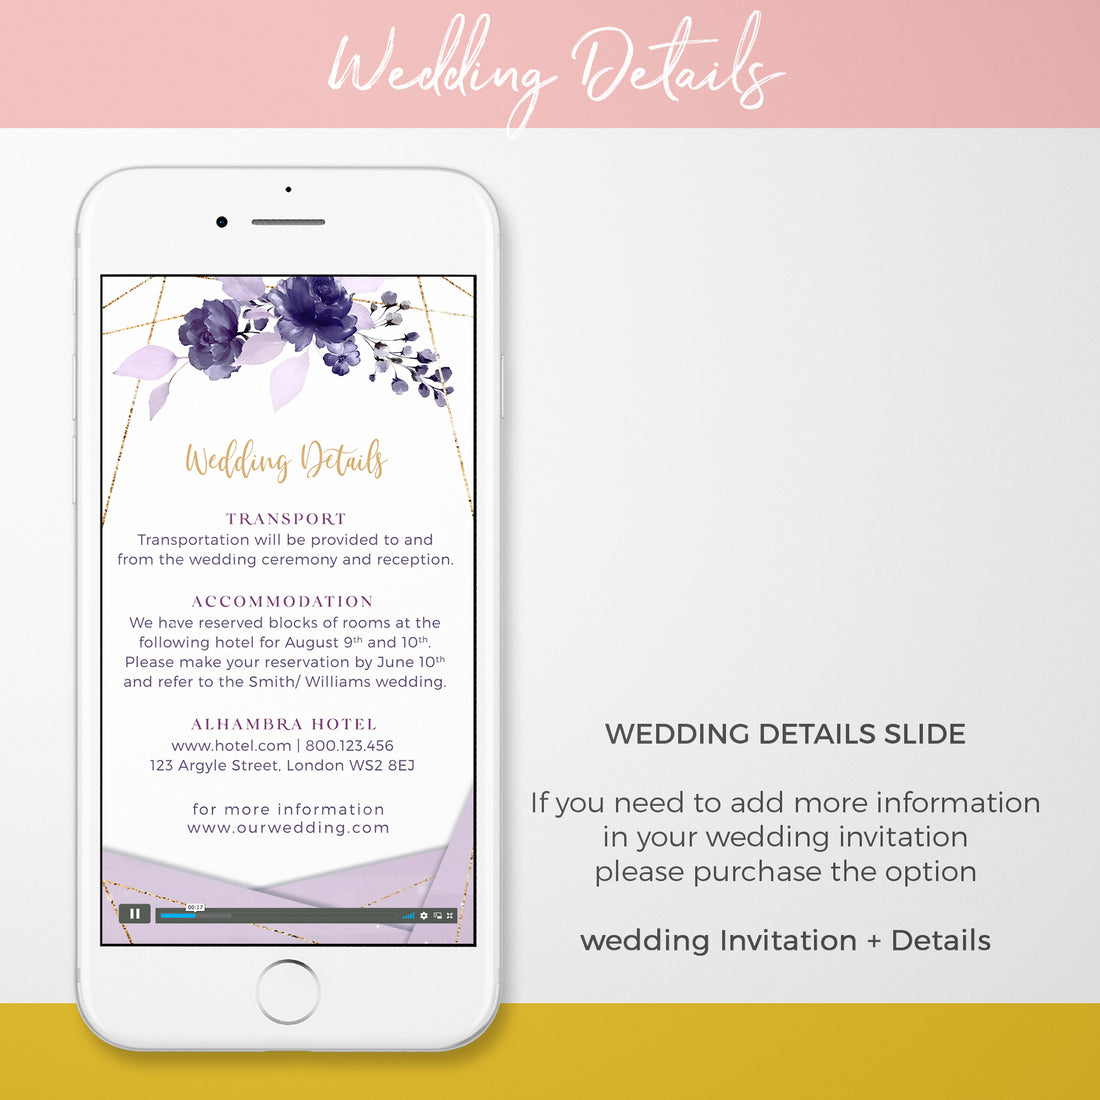 Violetta | Purple Lilac Wedding Invitation Video